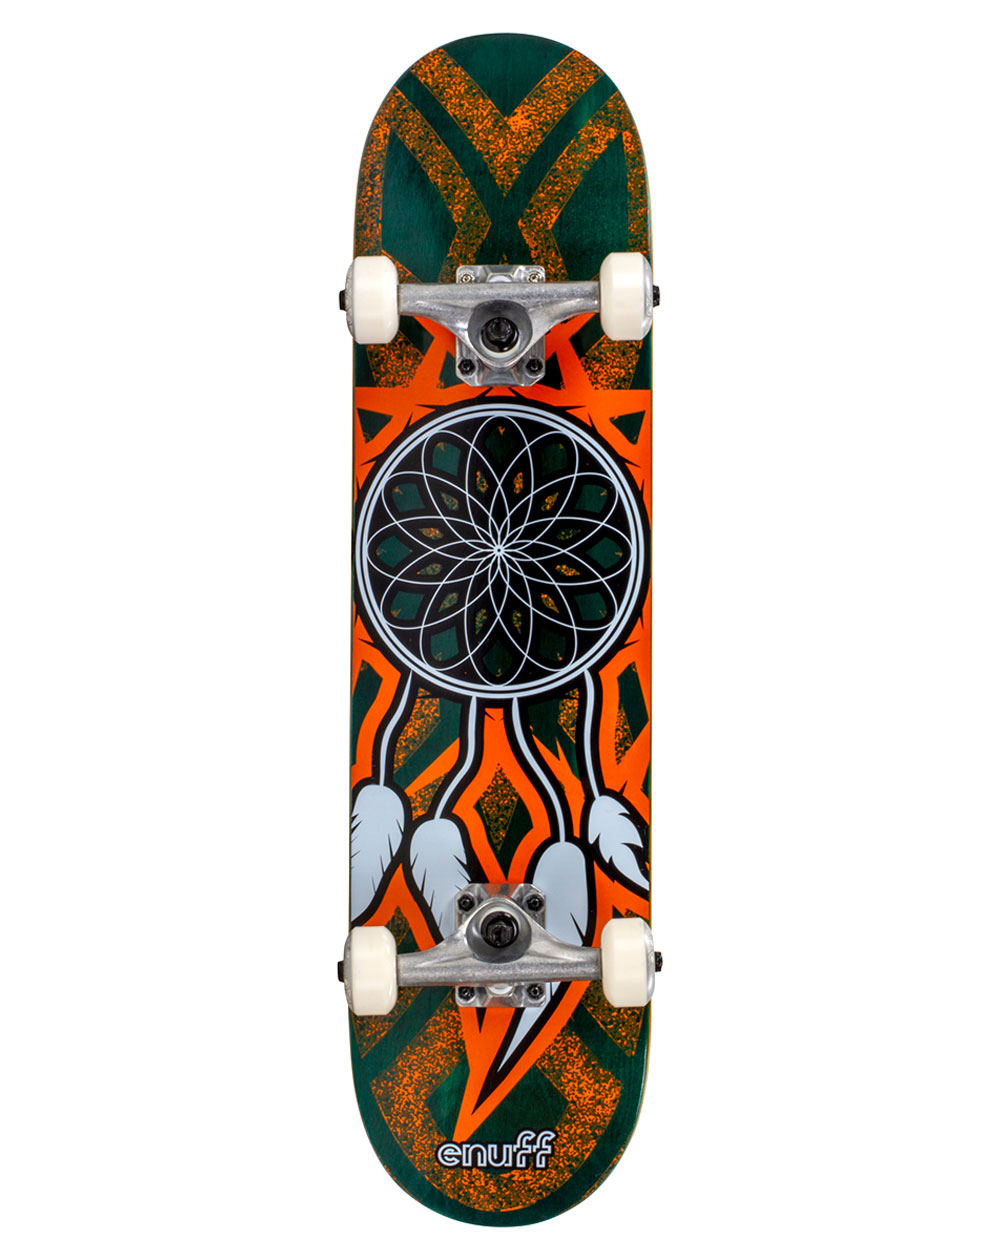 Enuff Skateboard Complète Dreamcatcher 7.75" Teal/Orange